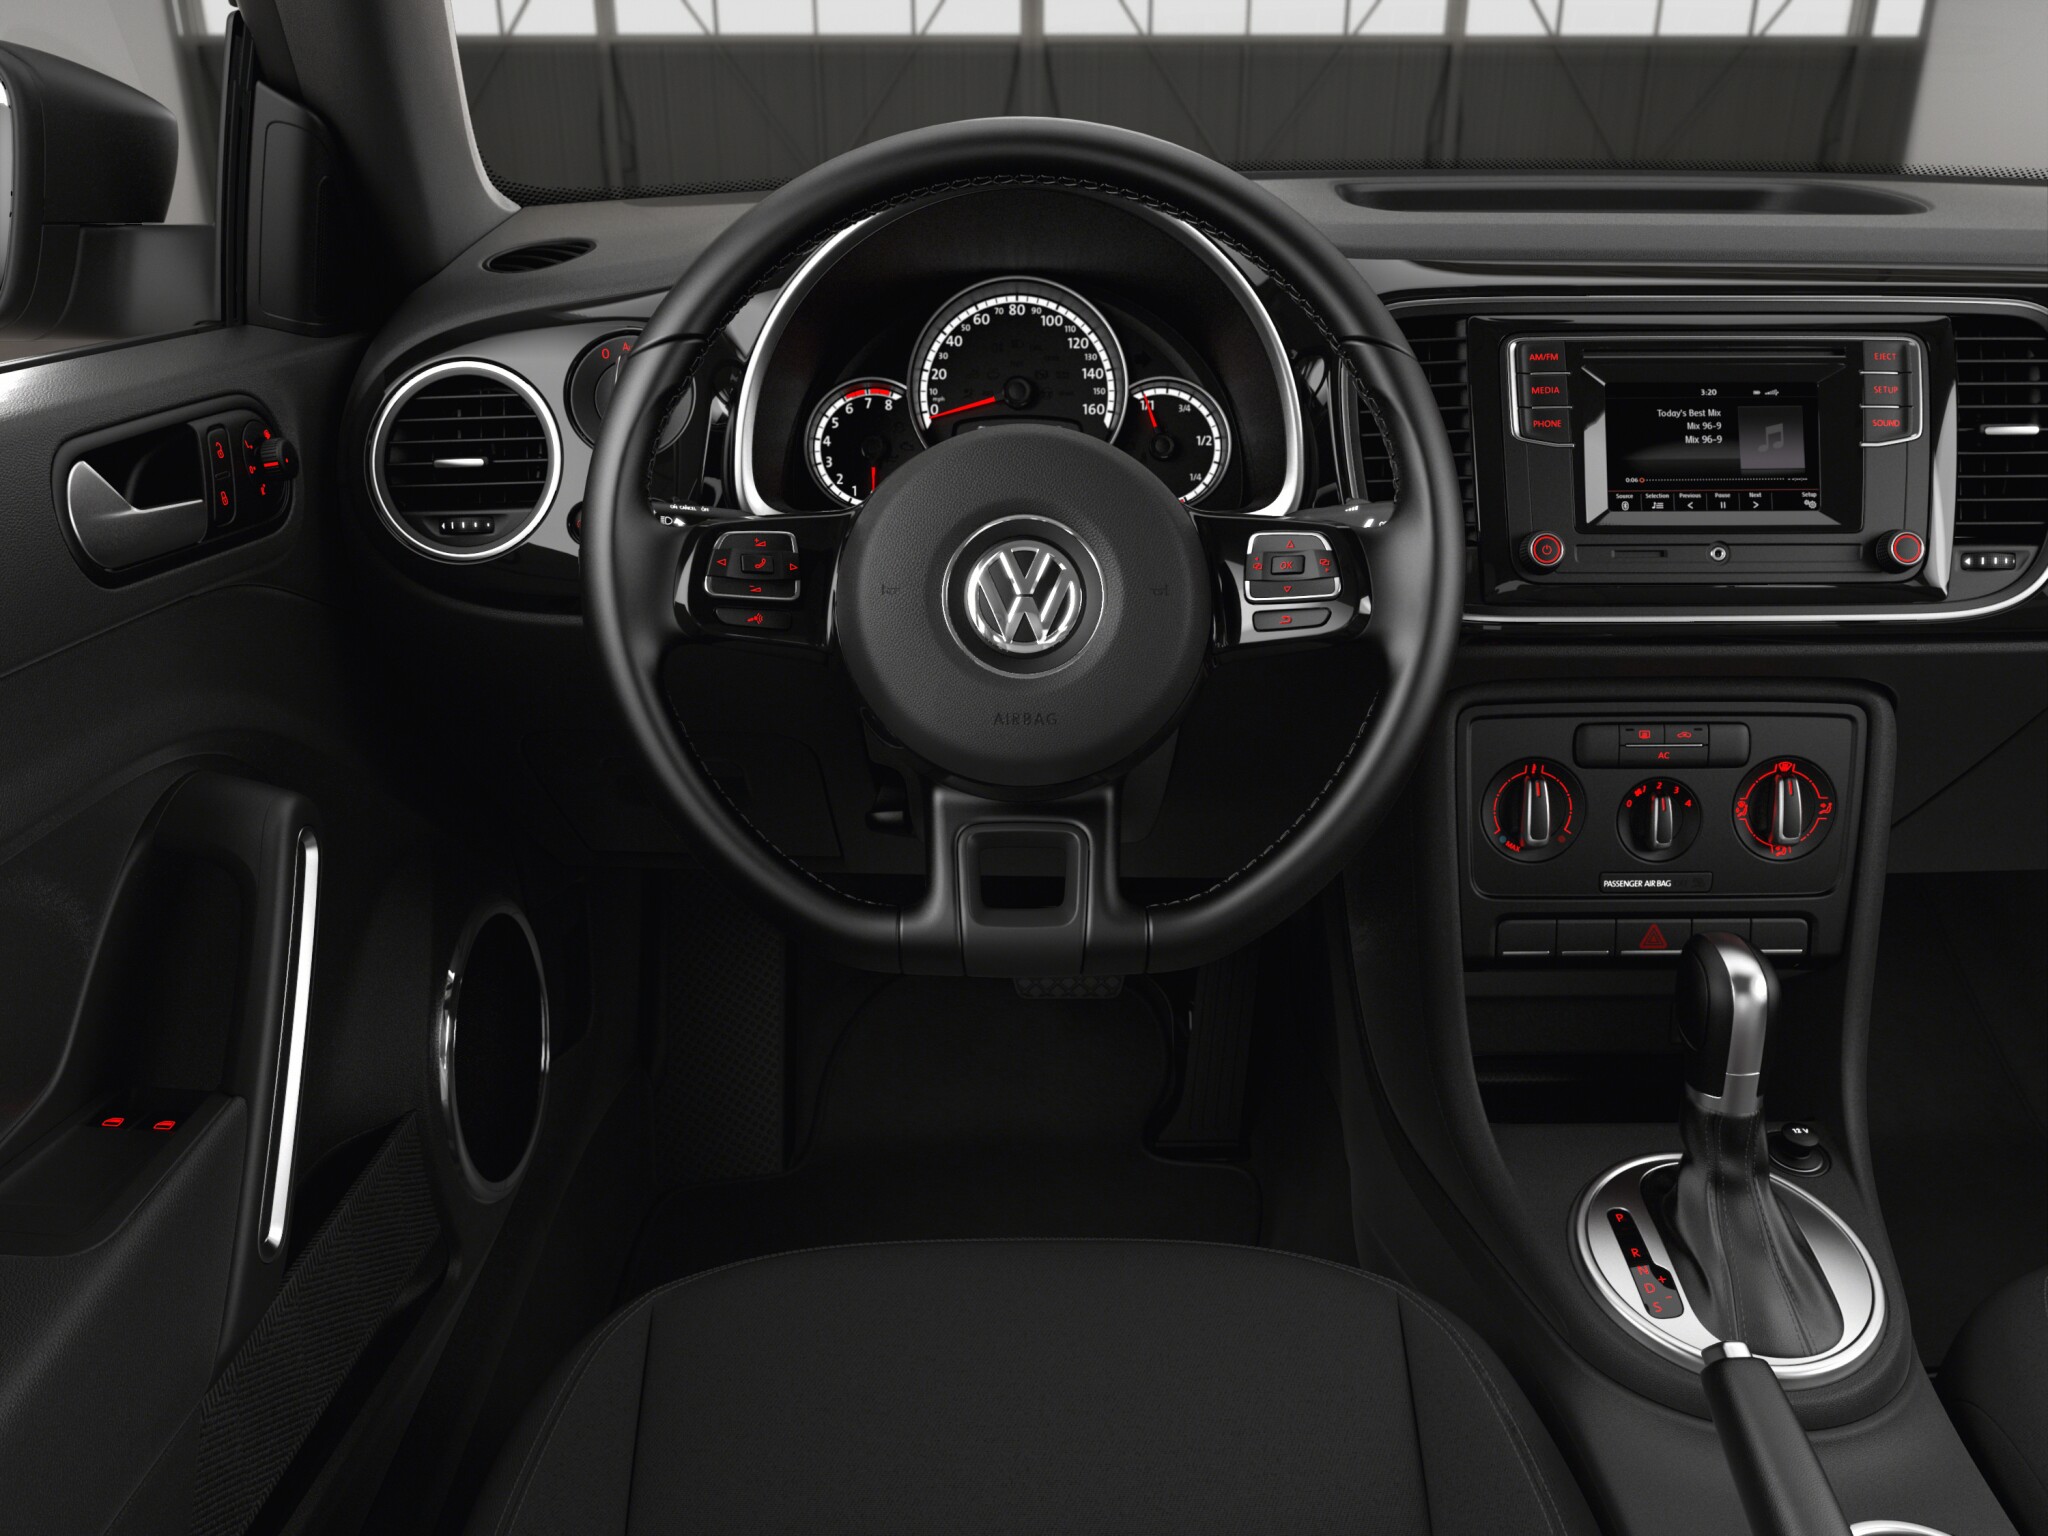 Volkswagen Beetle SE interior front dashboard view